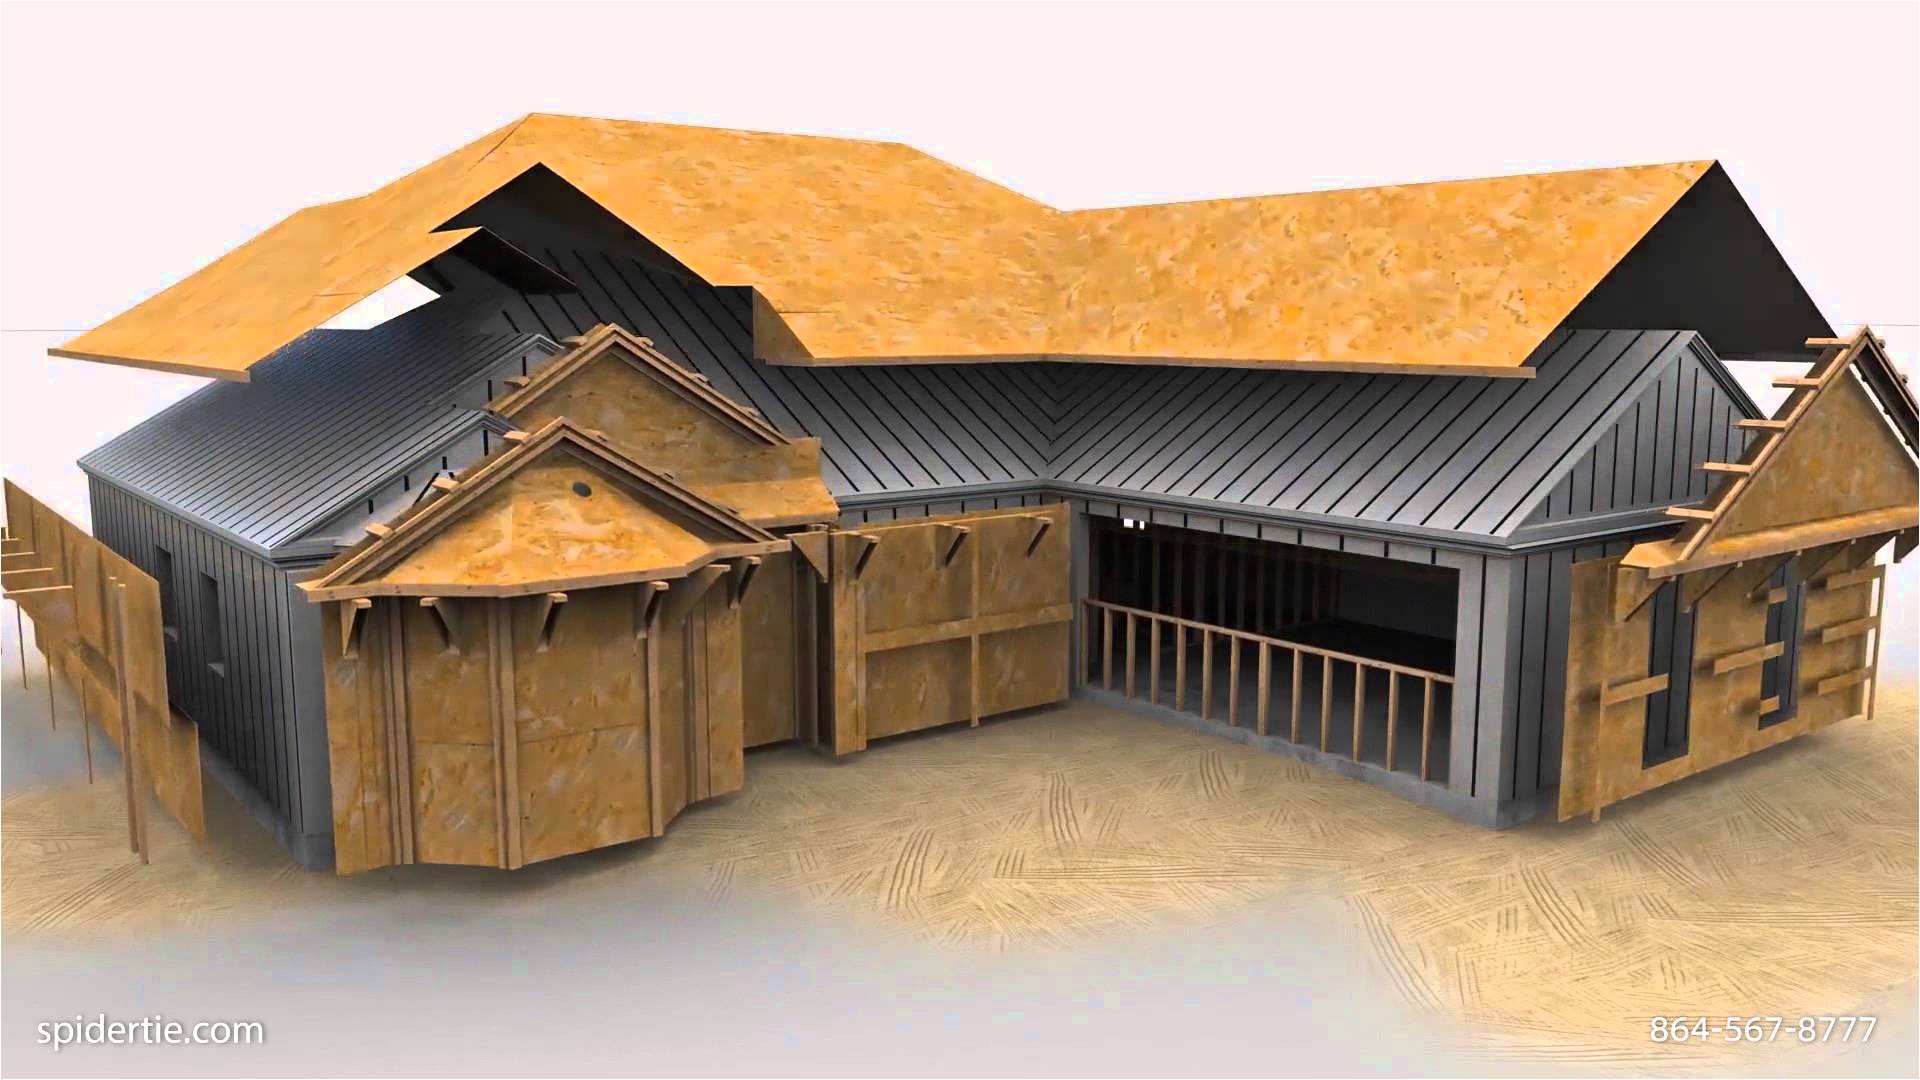 Spider Tie Concrete House Plans Build the Most Resistant Home Ever Build Home Design